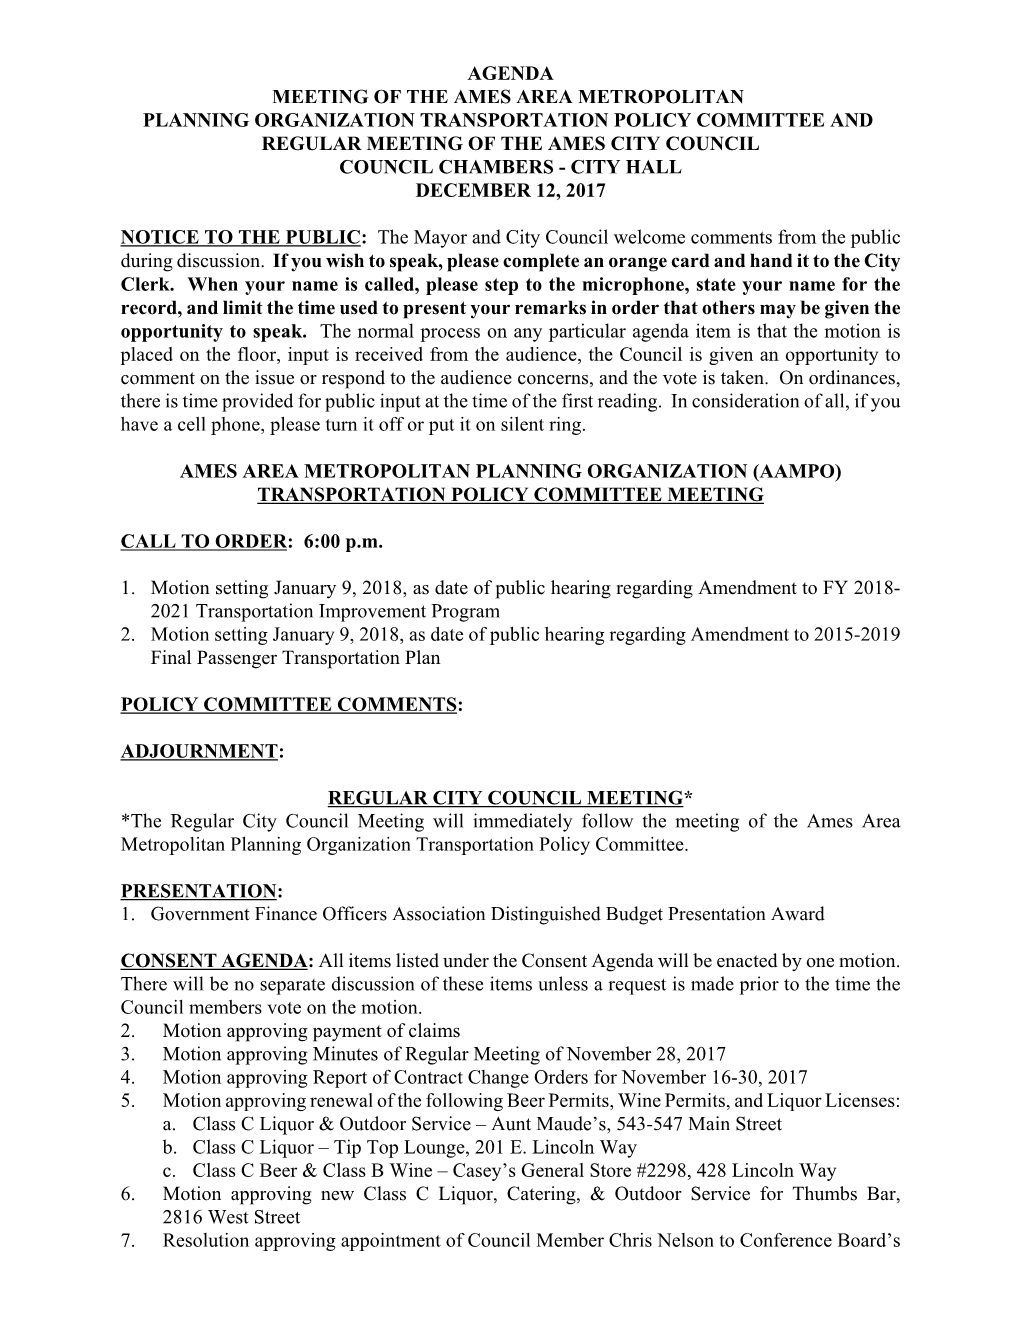 Agenda Meeting of the Ames Area Metropolitan Planning